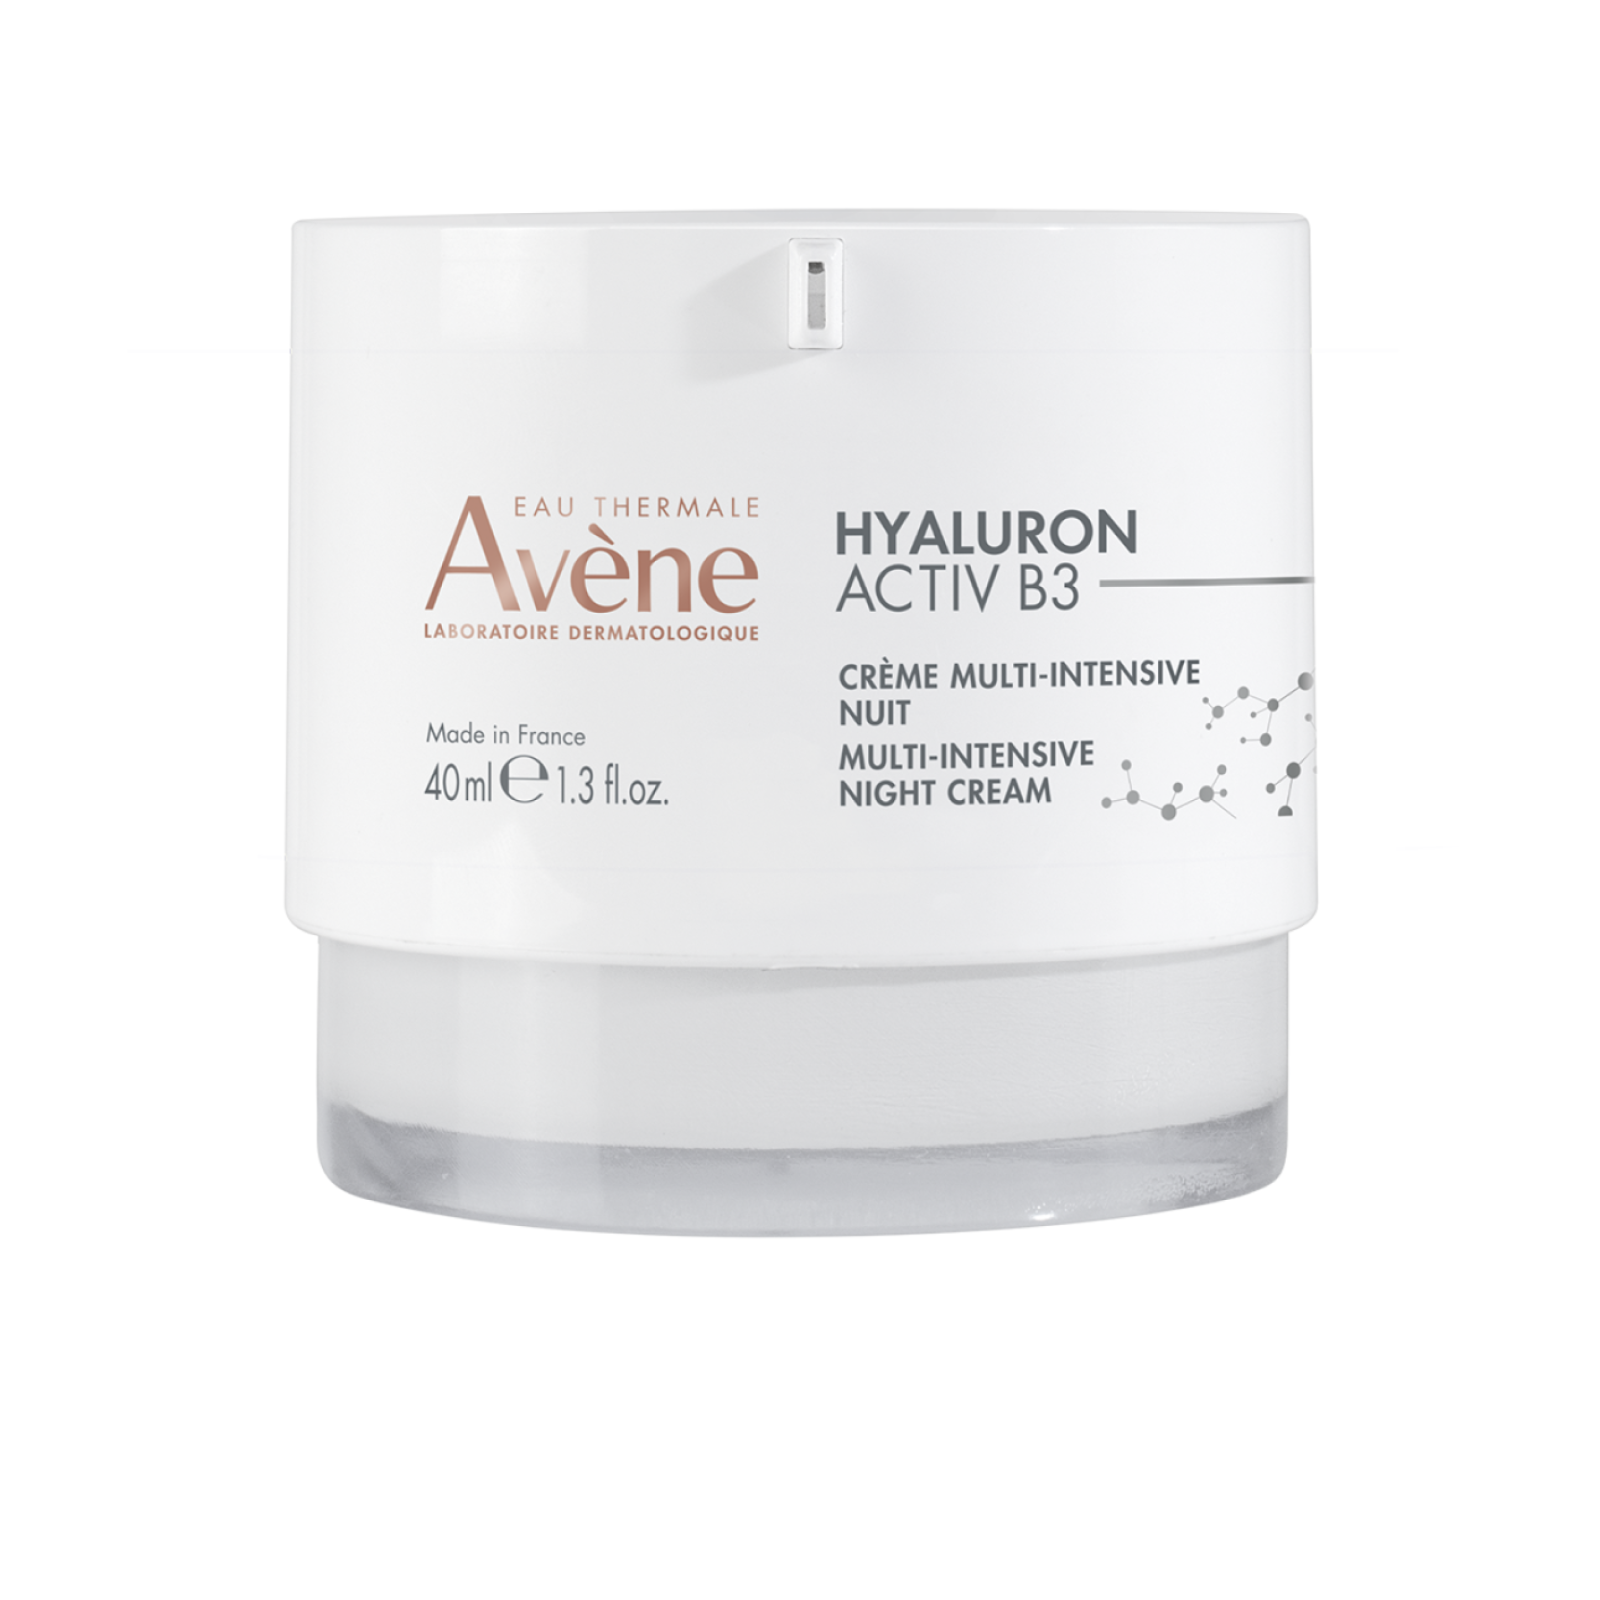 Creme si geluri de fata - Avene Hyaluron Activ B3 Crema de noapte multi-intensiva, 40 ml